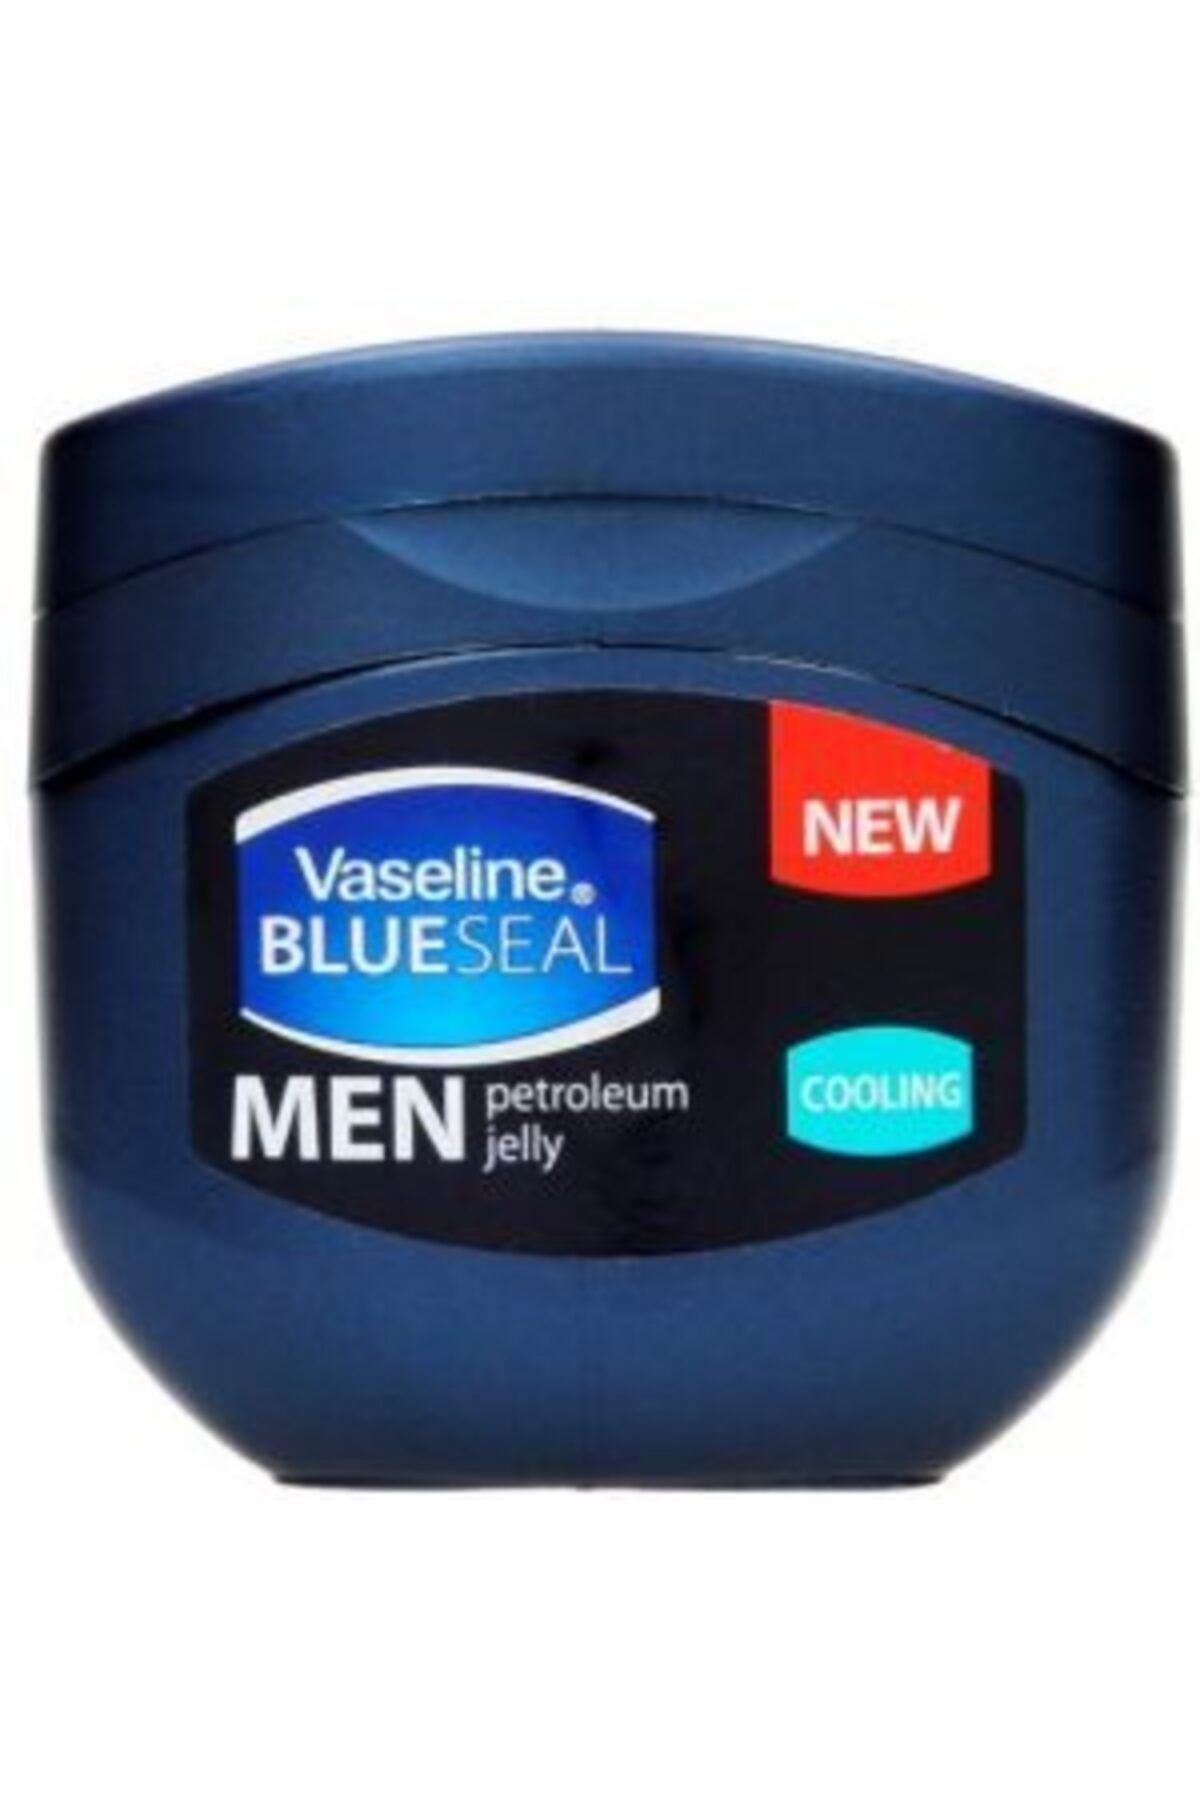 Vaseline Blueseal Petroleum Jelly Men Cooling 100ml Vazelin